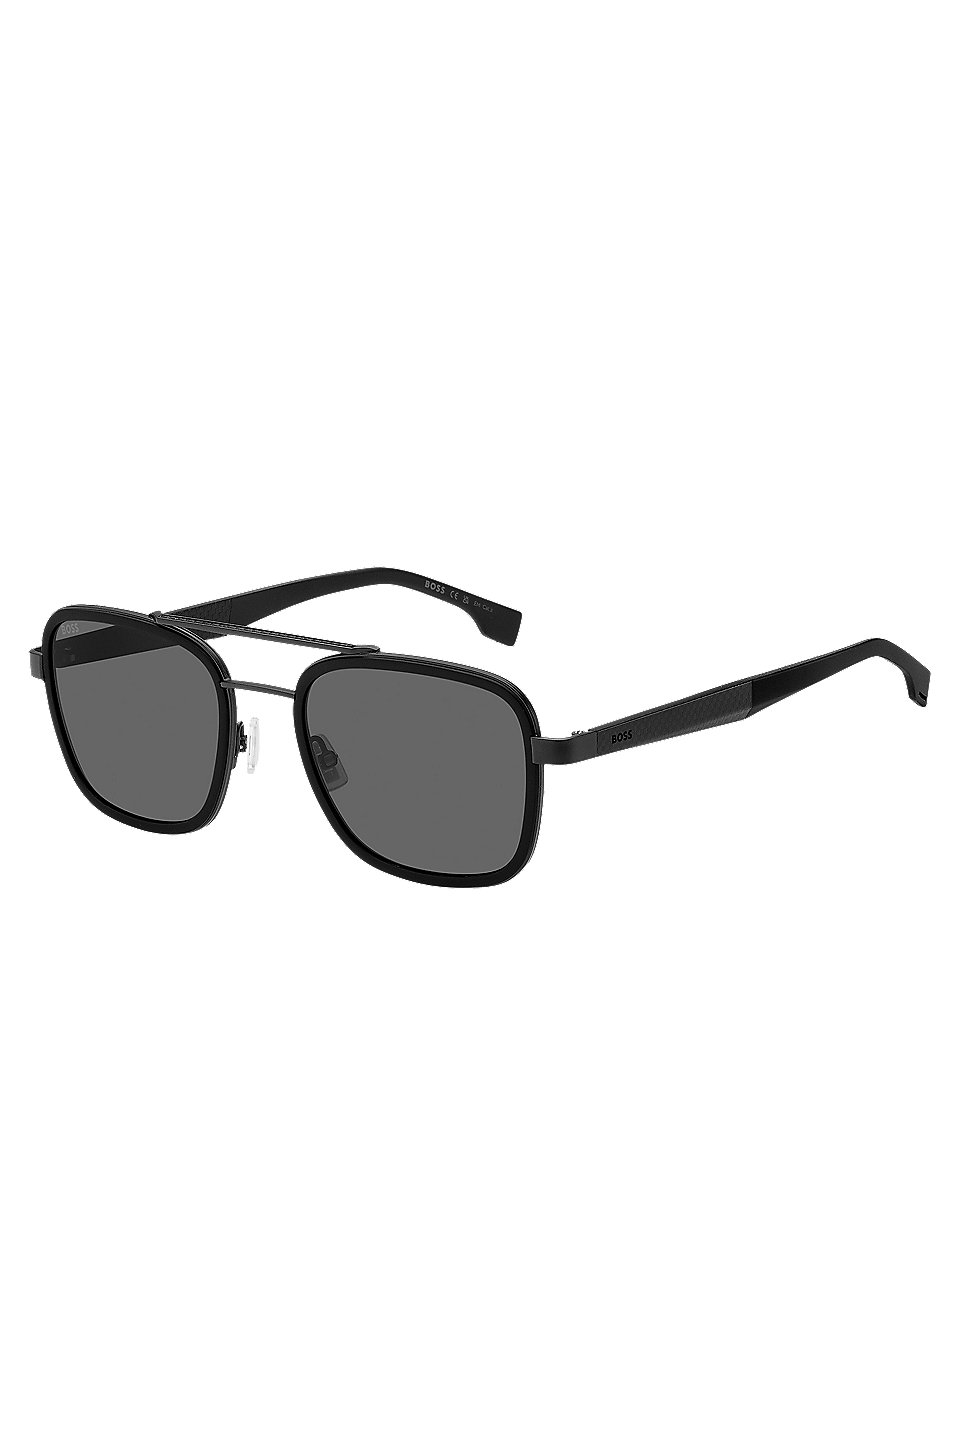 BOSS - Carbon-fiber sunglasses in black with double bridge